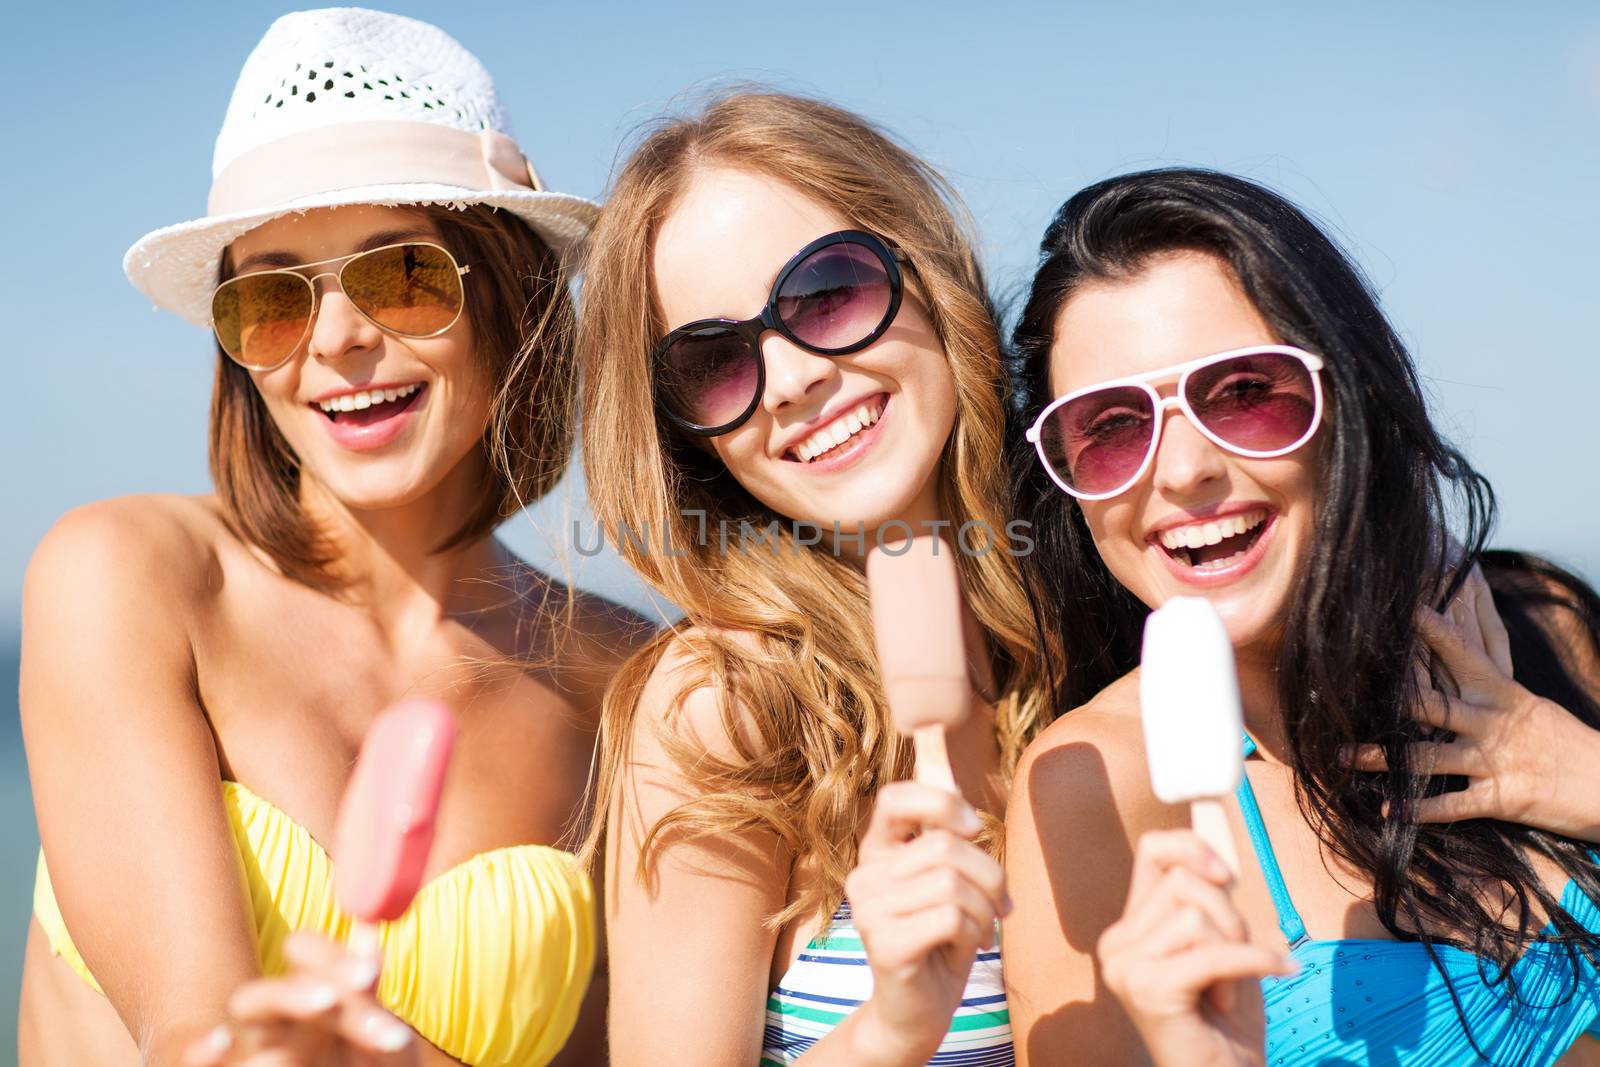 girls in bikinis with ice cream on the beach by dolgachov